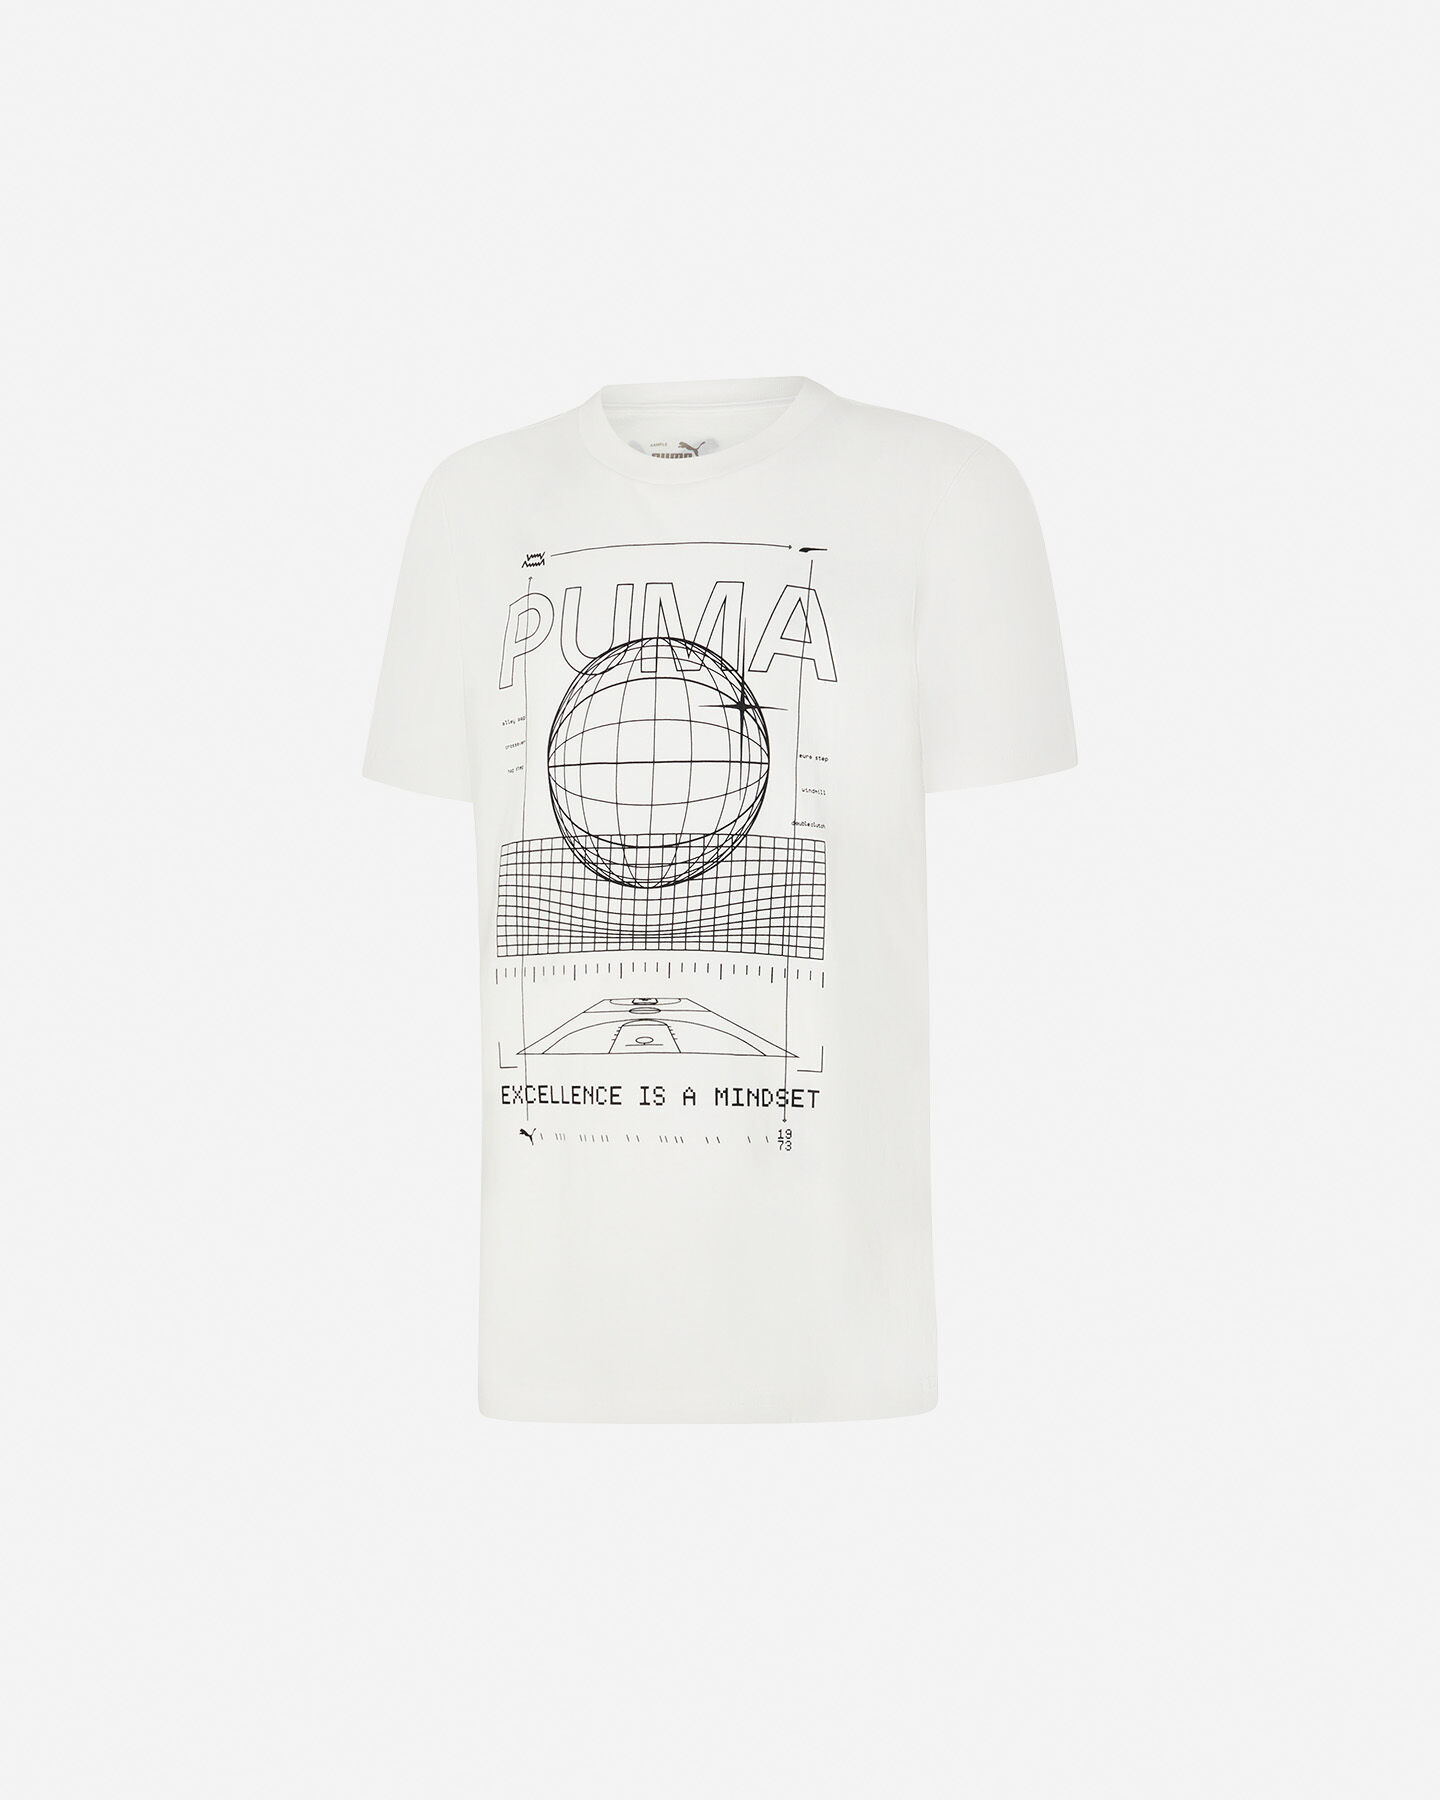  T-Shirt PUMA TECHNICAL BALL JR S5544810|02|176 scatto 0